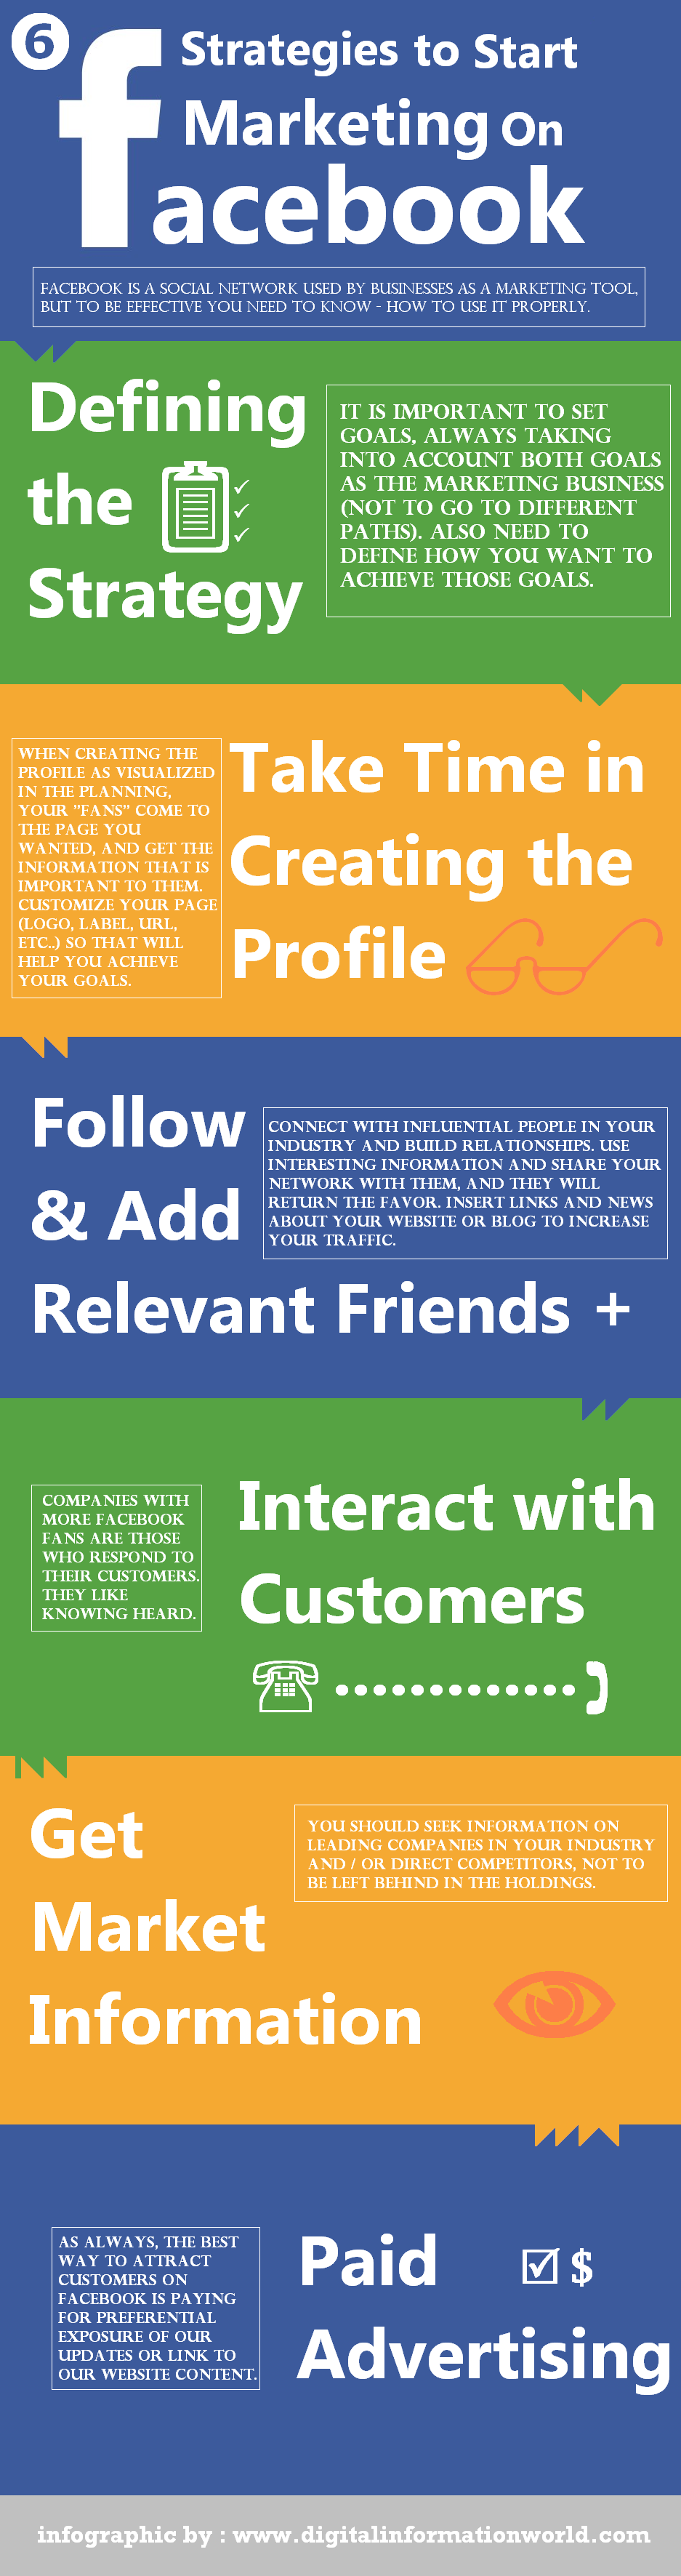 6 Fundamental Facebook Marketing Strategies Infographic Facebook Marketing Strategy Social Media Facebook Marketing